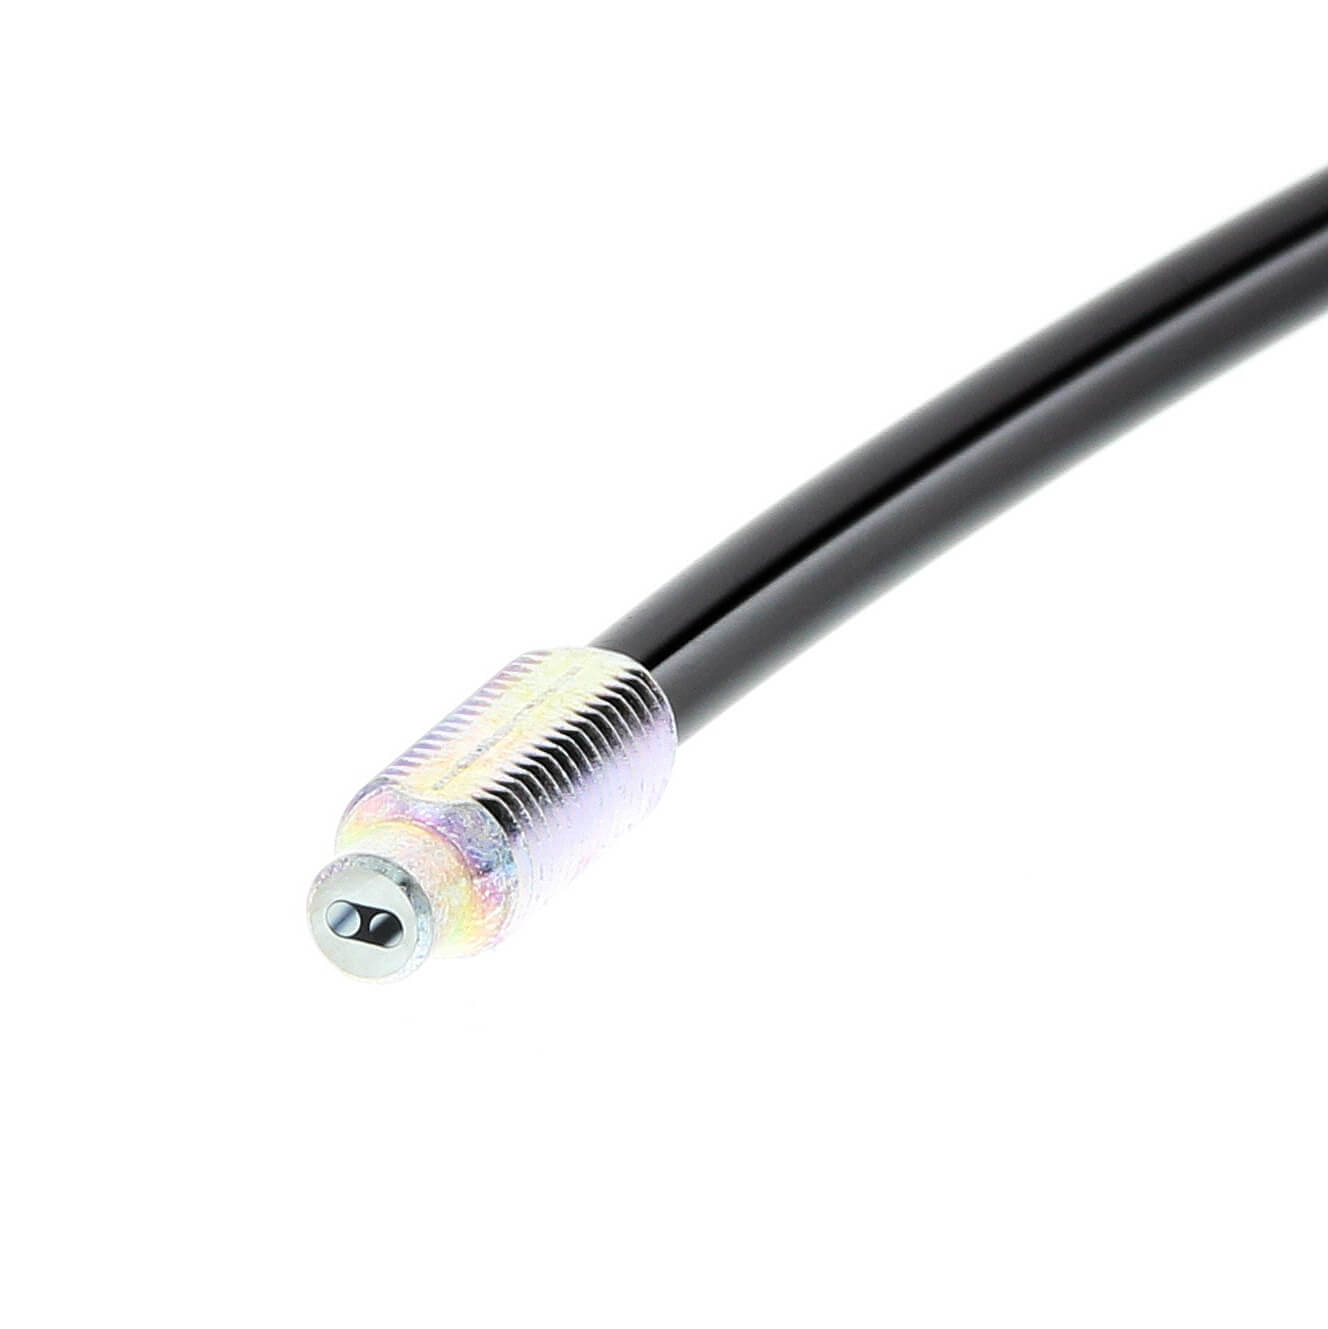 1 PCS New OMRON E32-DC200 Photoelectric Switch Fiber Unit M6 Thread 2M Cable 